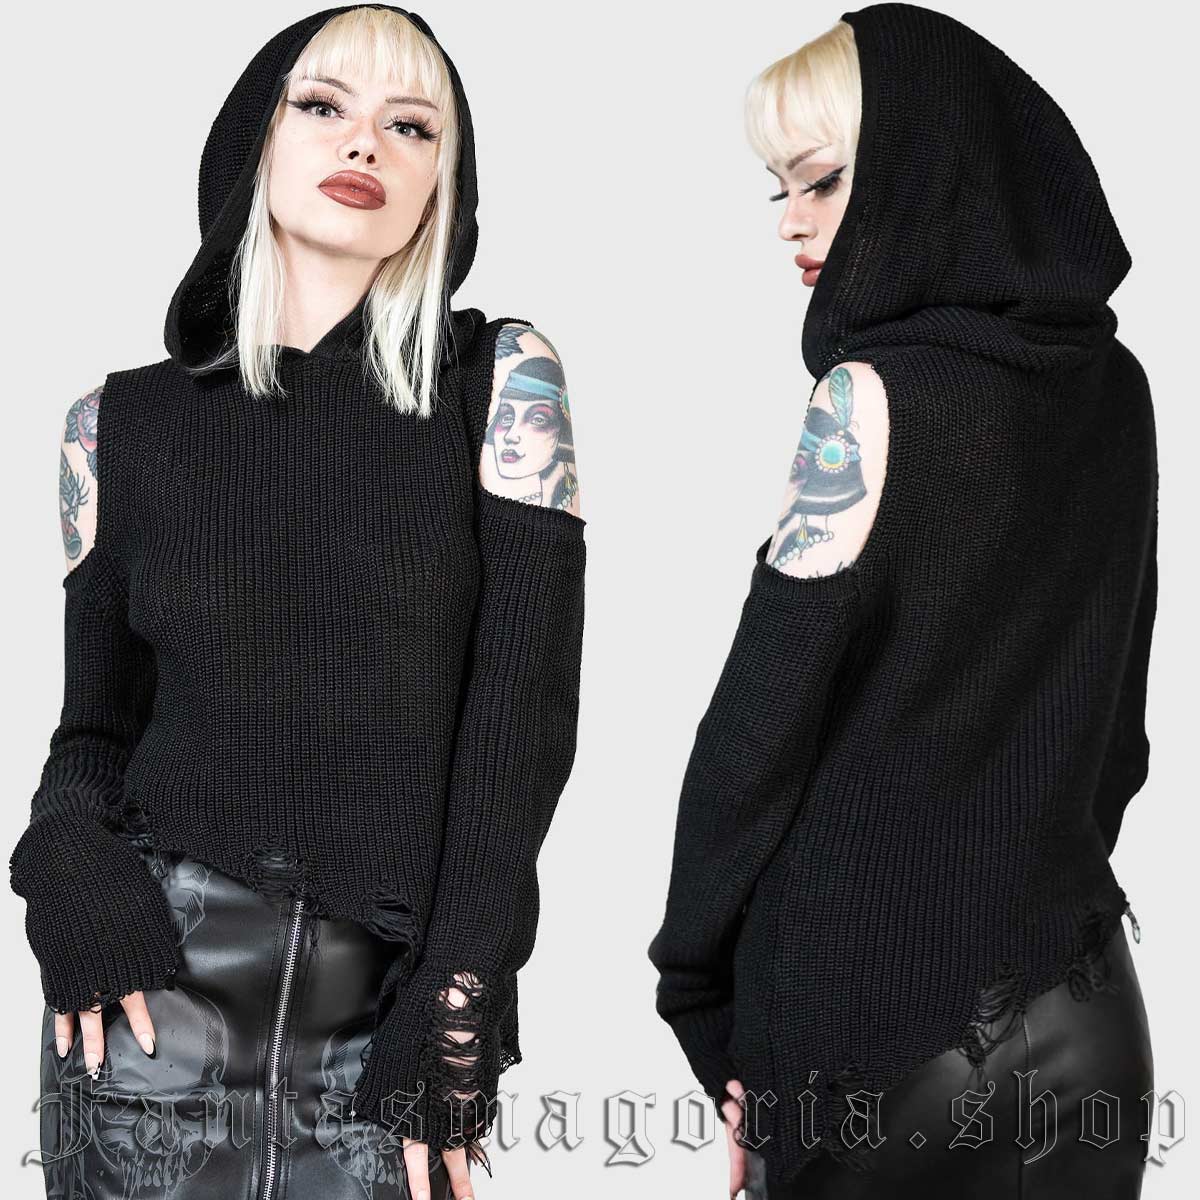 Women's Gothic casual asymmetric hem distressed cold shoulder hooded sweater. Killstar